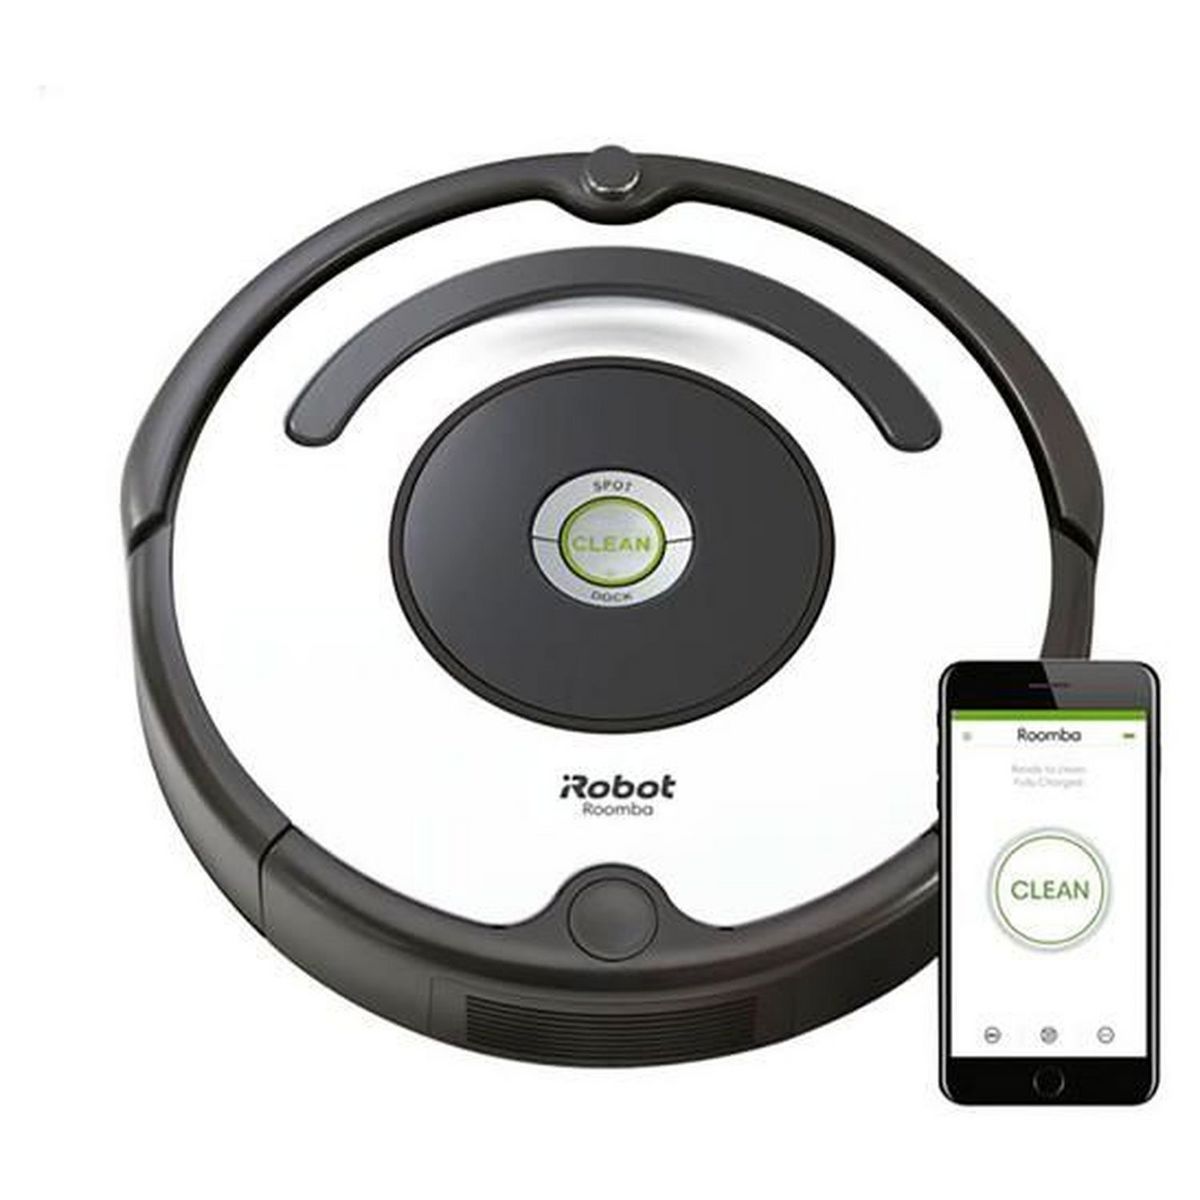 Robot de aspirare iRobot Roomba R675040, 0.6 L, Wi-Fi, Navigatie Smart, Filtru AeroVac, Autonomie de pana la 90 minute, Alb/negru